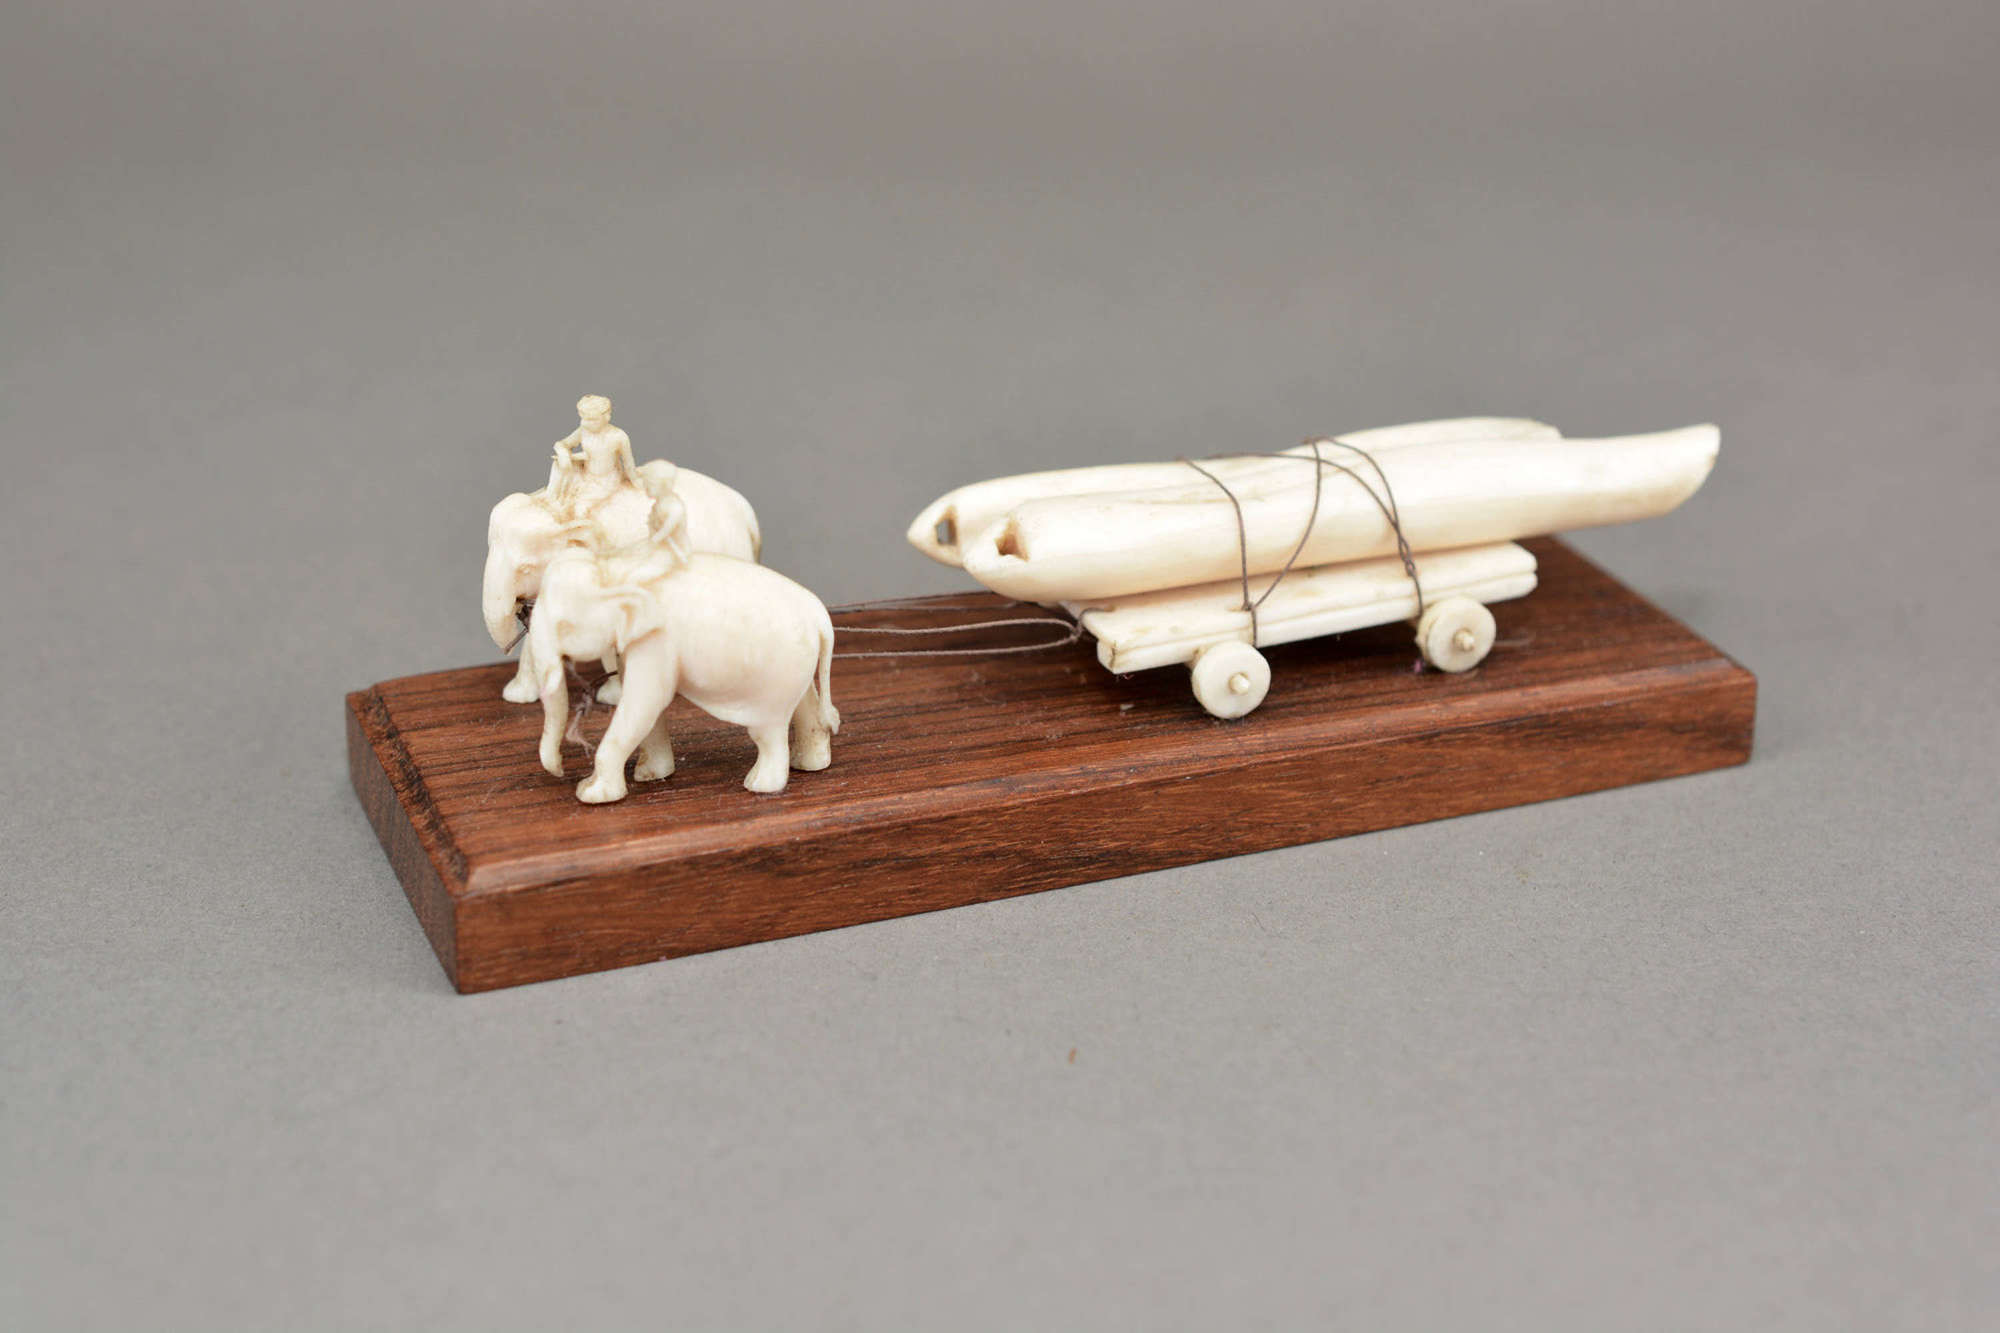 Hand carved model elephants pulling a log cart